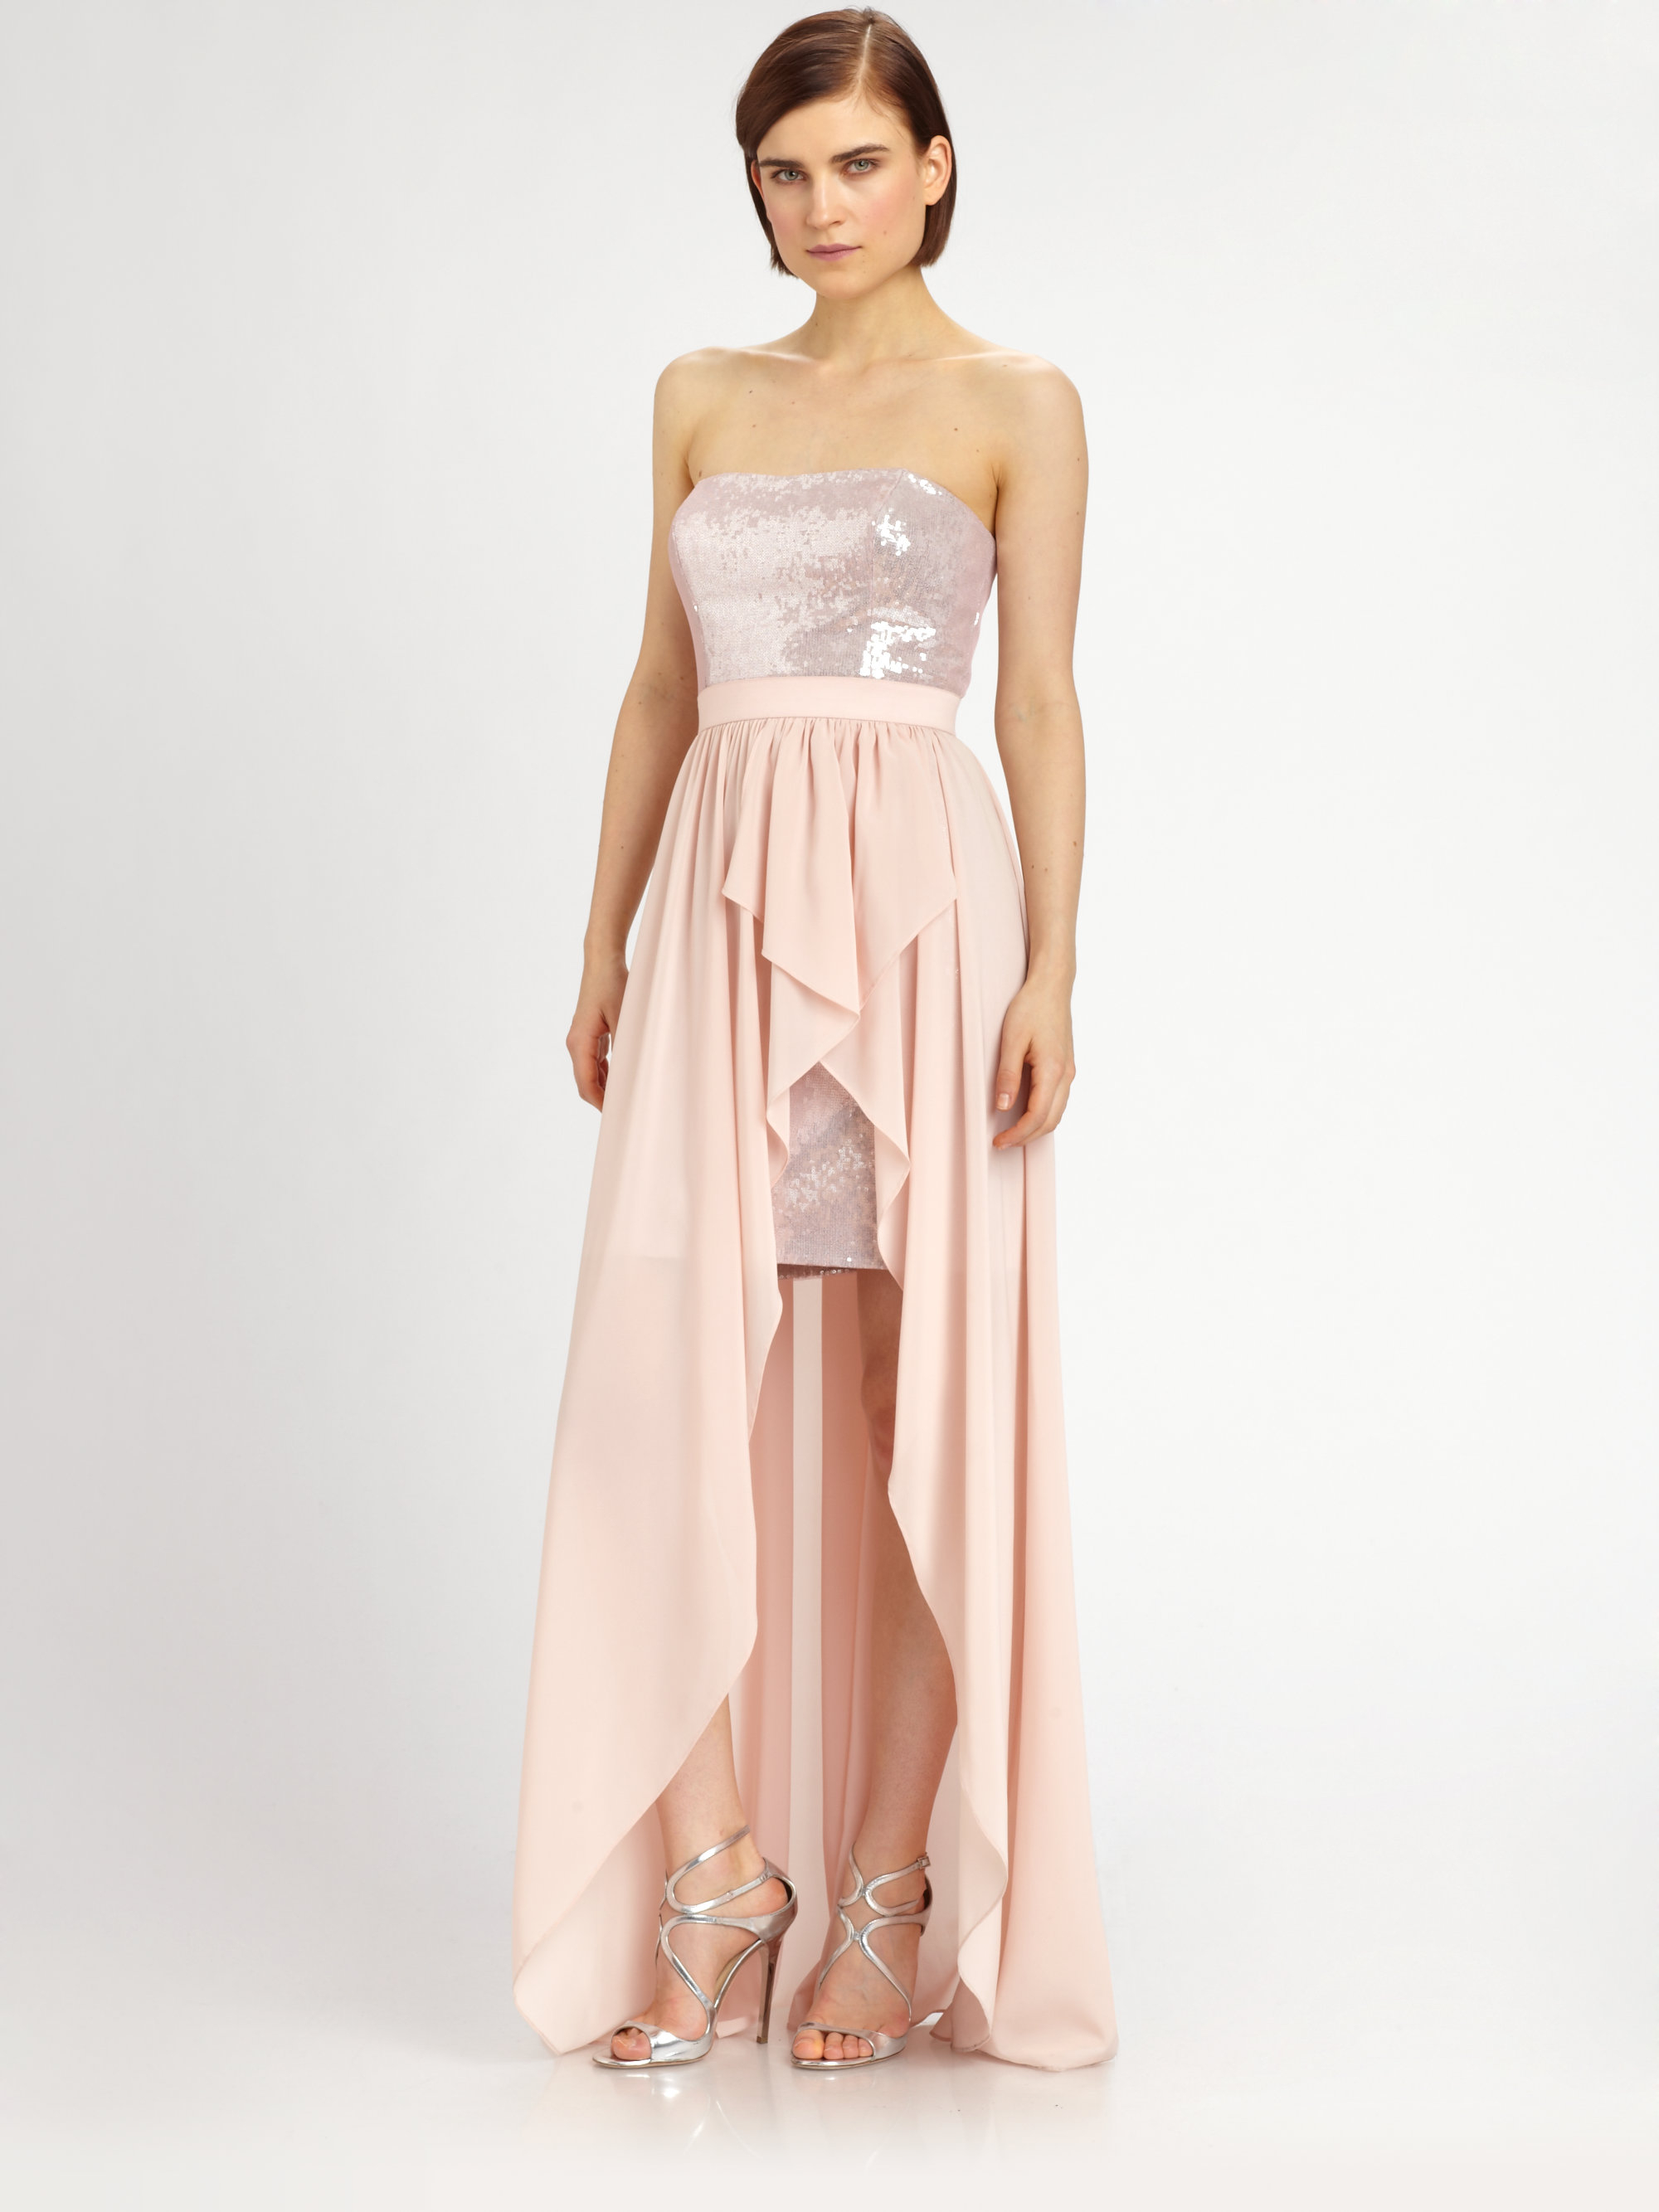 Lyst - Aidan Mattox Strapless Sequined Dress in Pink